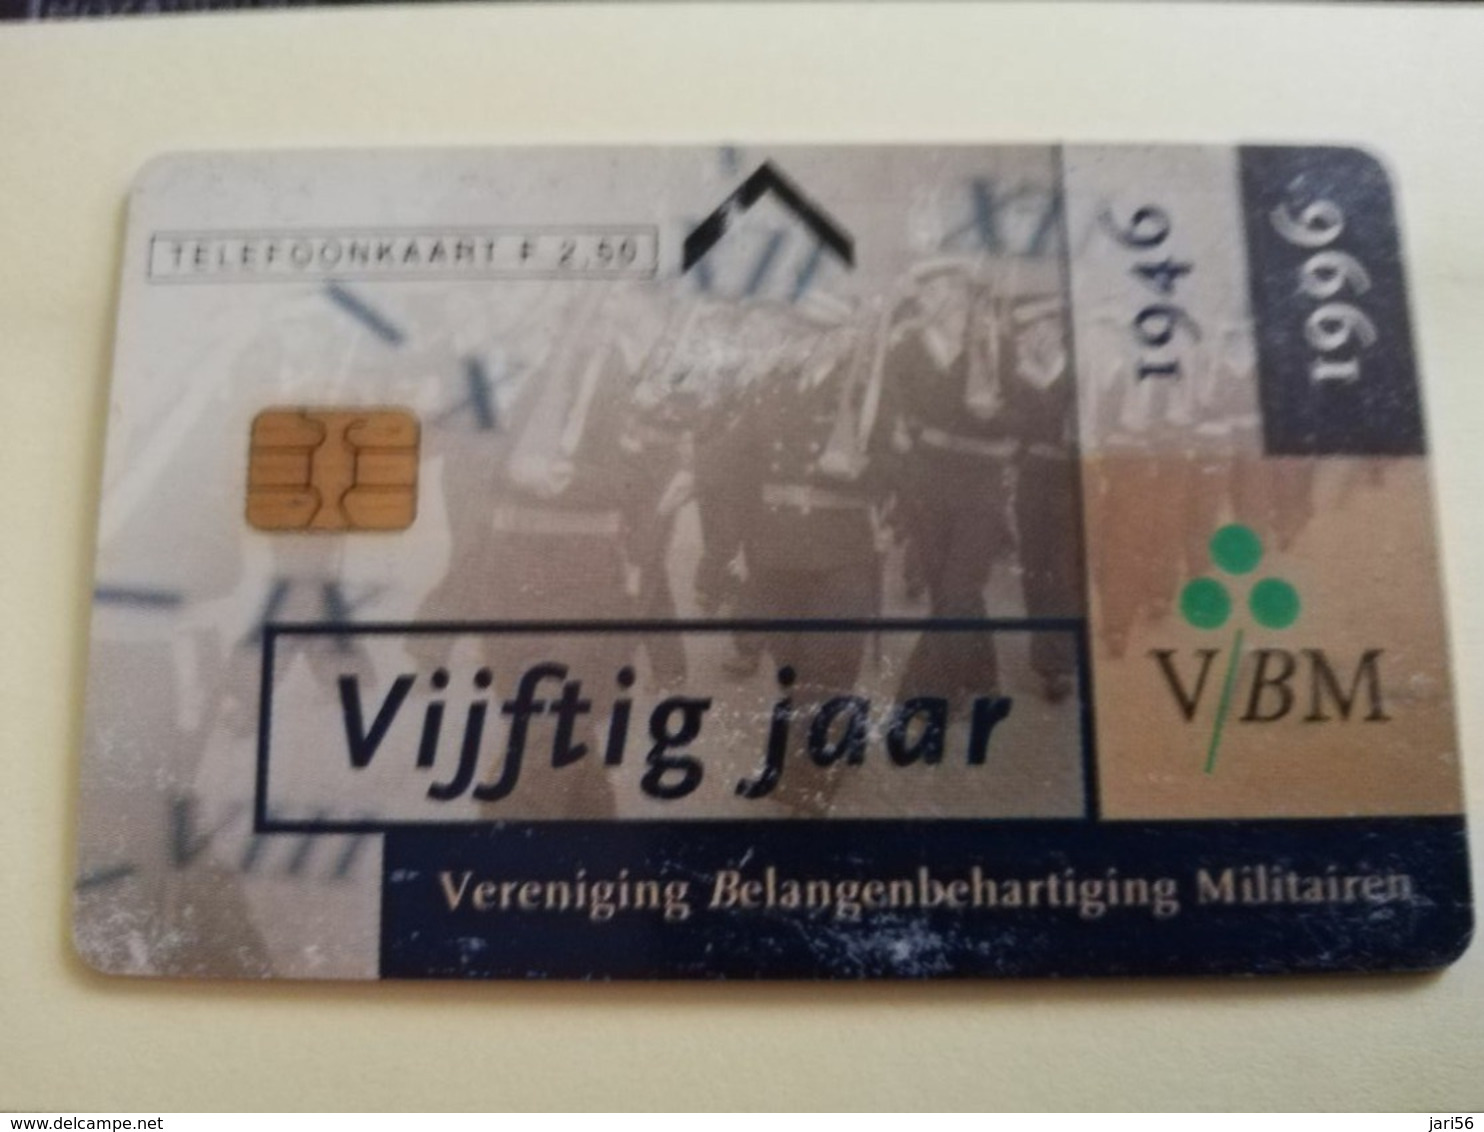 NETHERLANDS  ADVERTISING CHIPCARD HFL 2,50   CRD 275  VIJFTIG JAAR VBM VAKBOND MILITAIREN          Fine Used   ** 3209** - Private